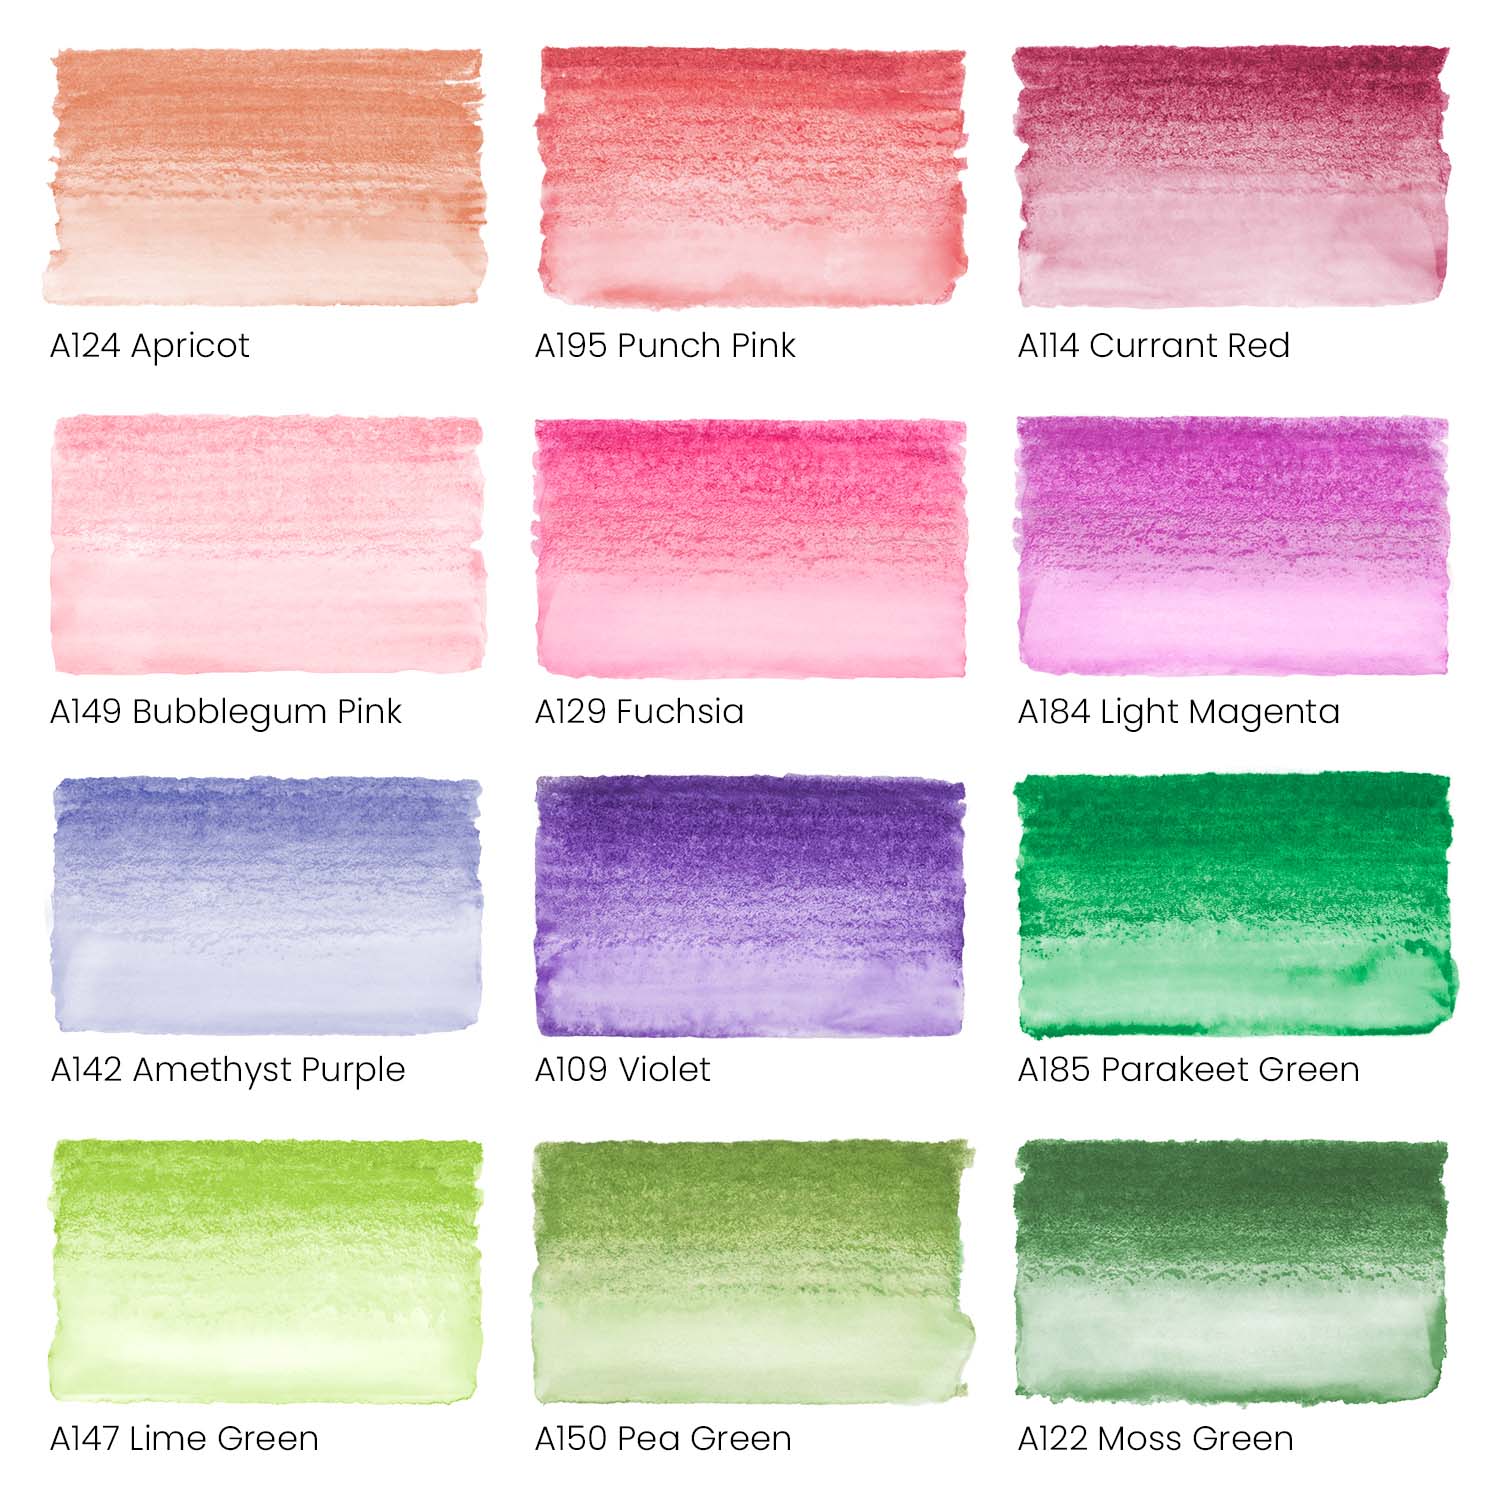 Set of 12 Arteza Real Brush Pens EN71 Muliti-Colors New No Packaging (d)